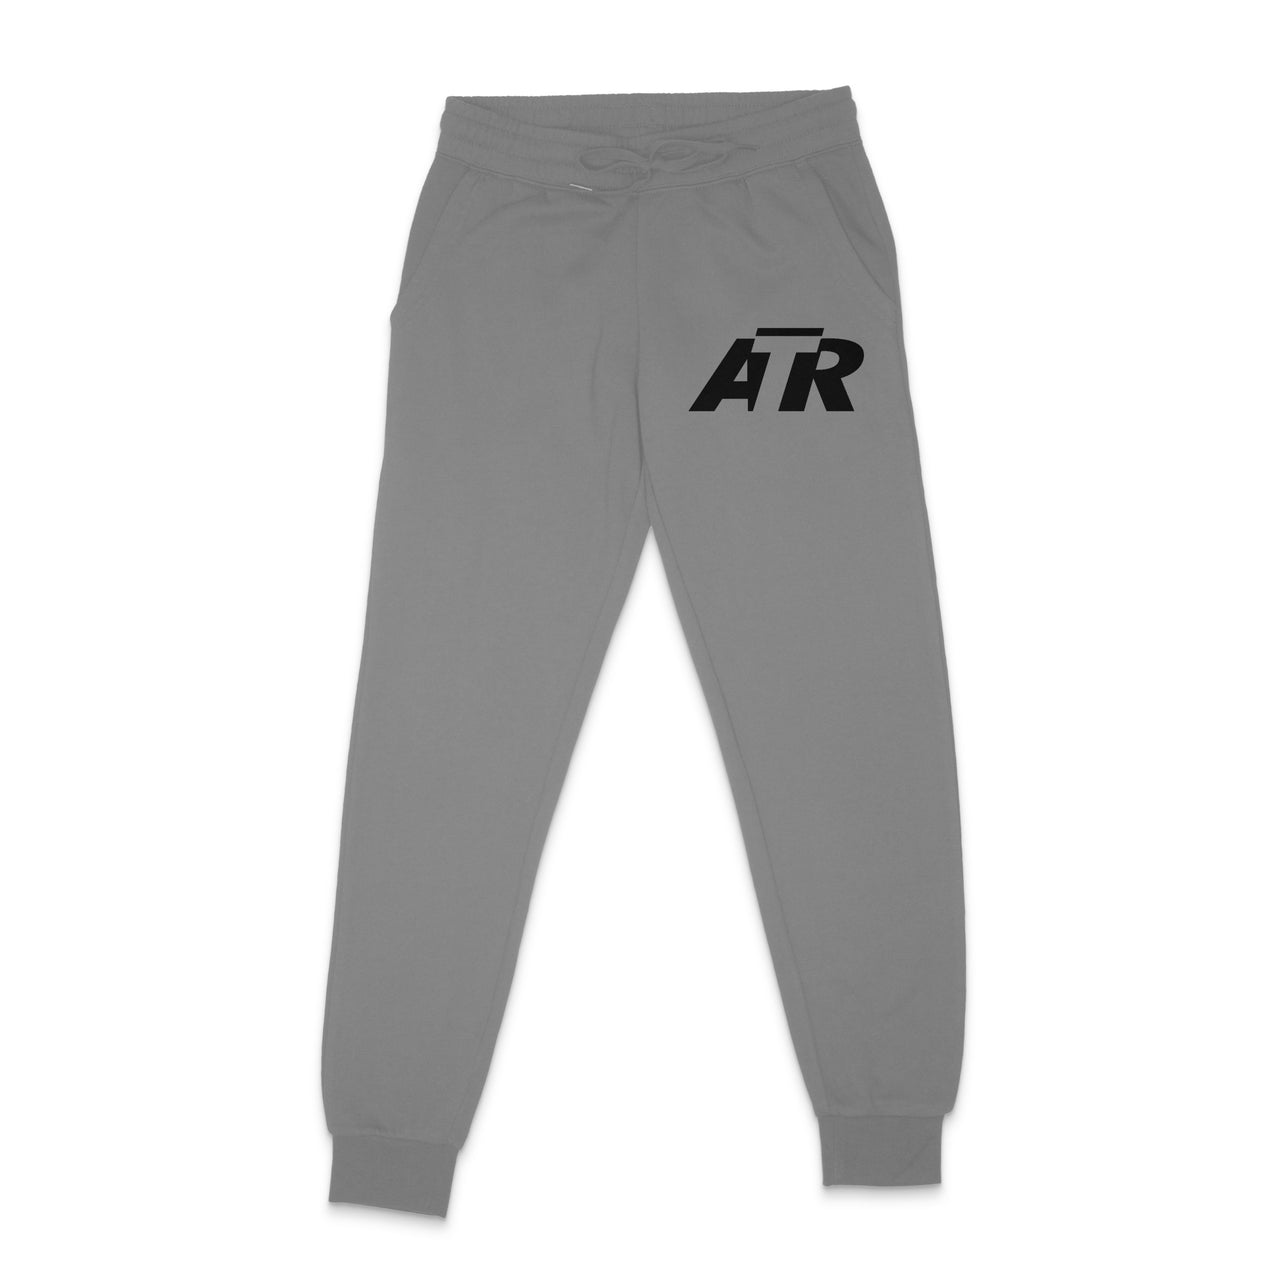 ATR & Text Designed Sweatpants